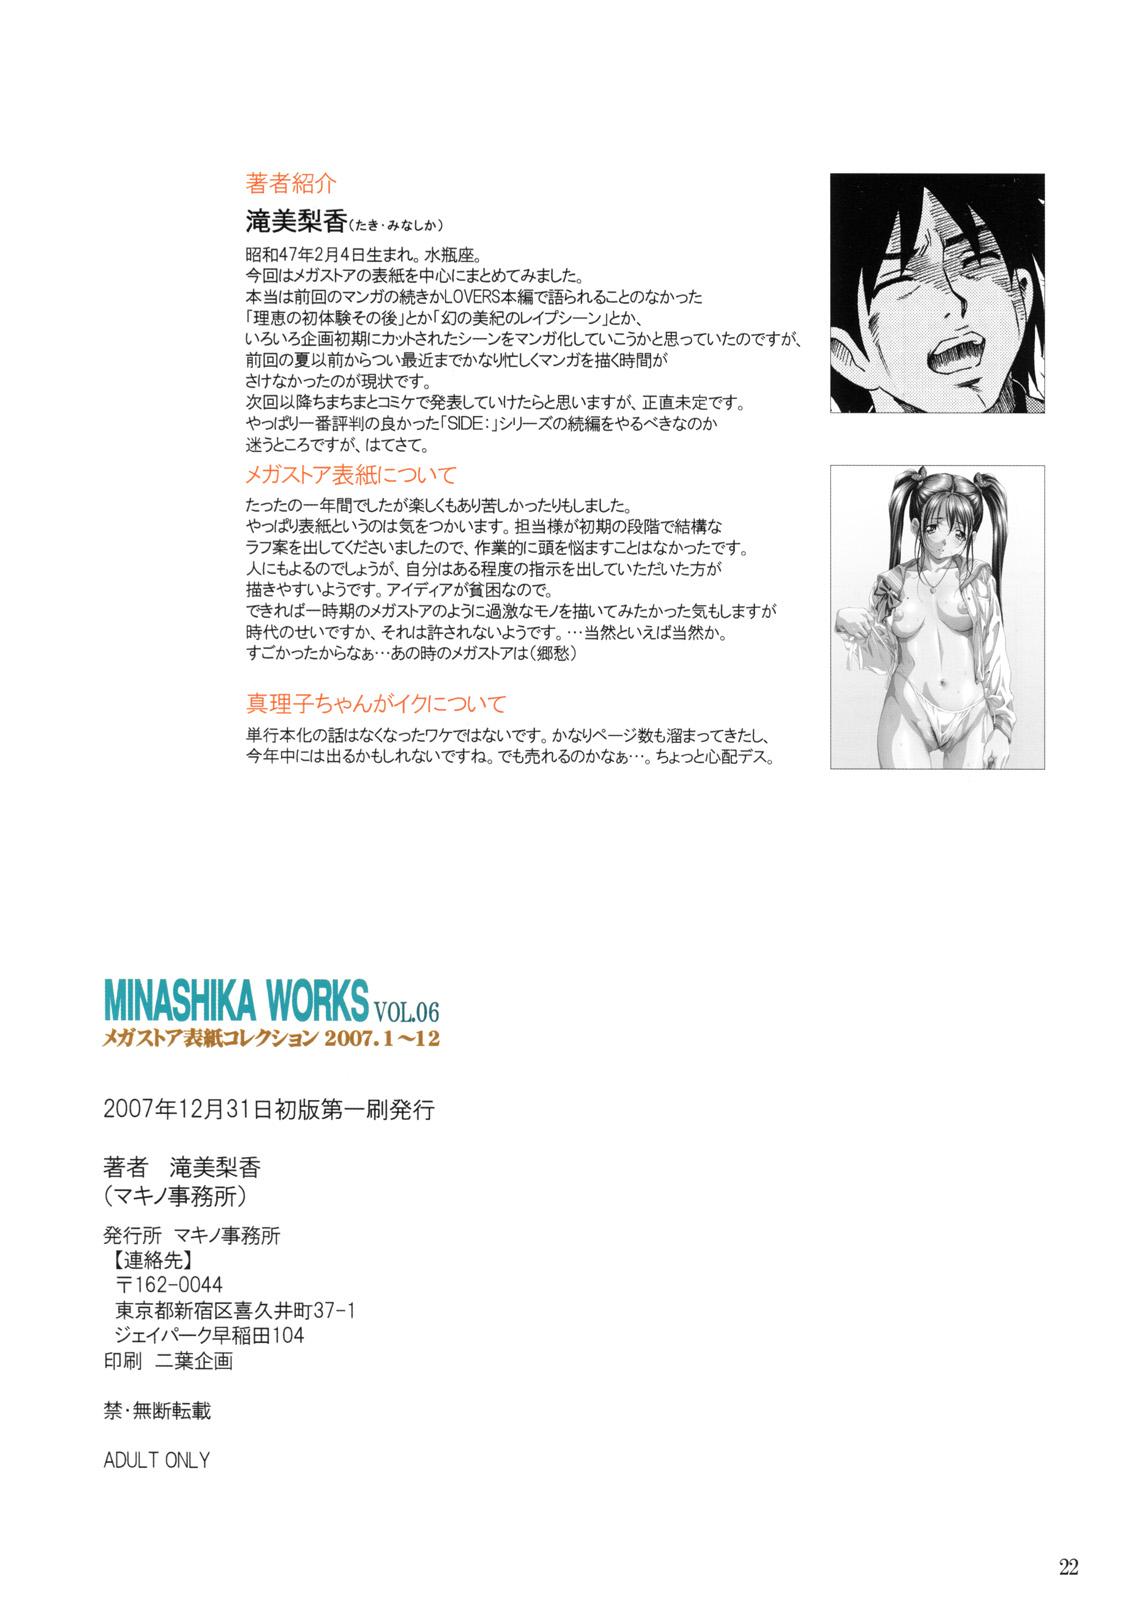 MINASHIKA WORKS Vol 06 Megastore Cover Collection 2007.1~12 20